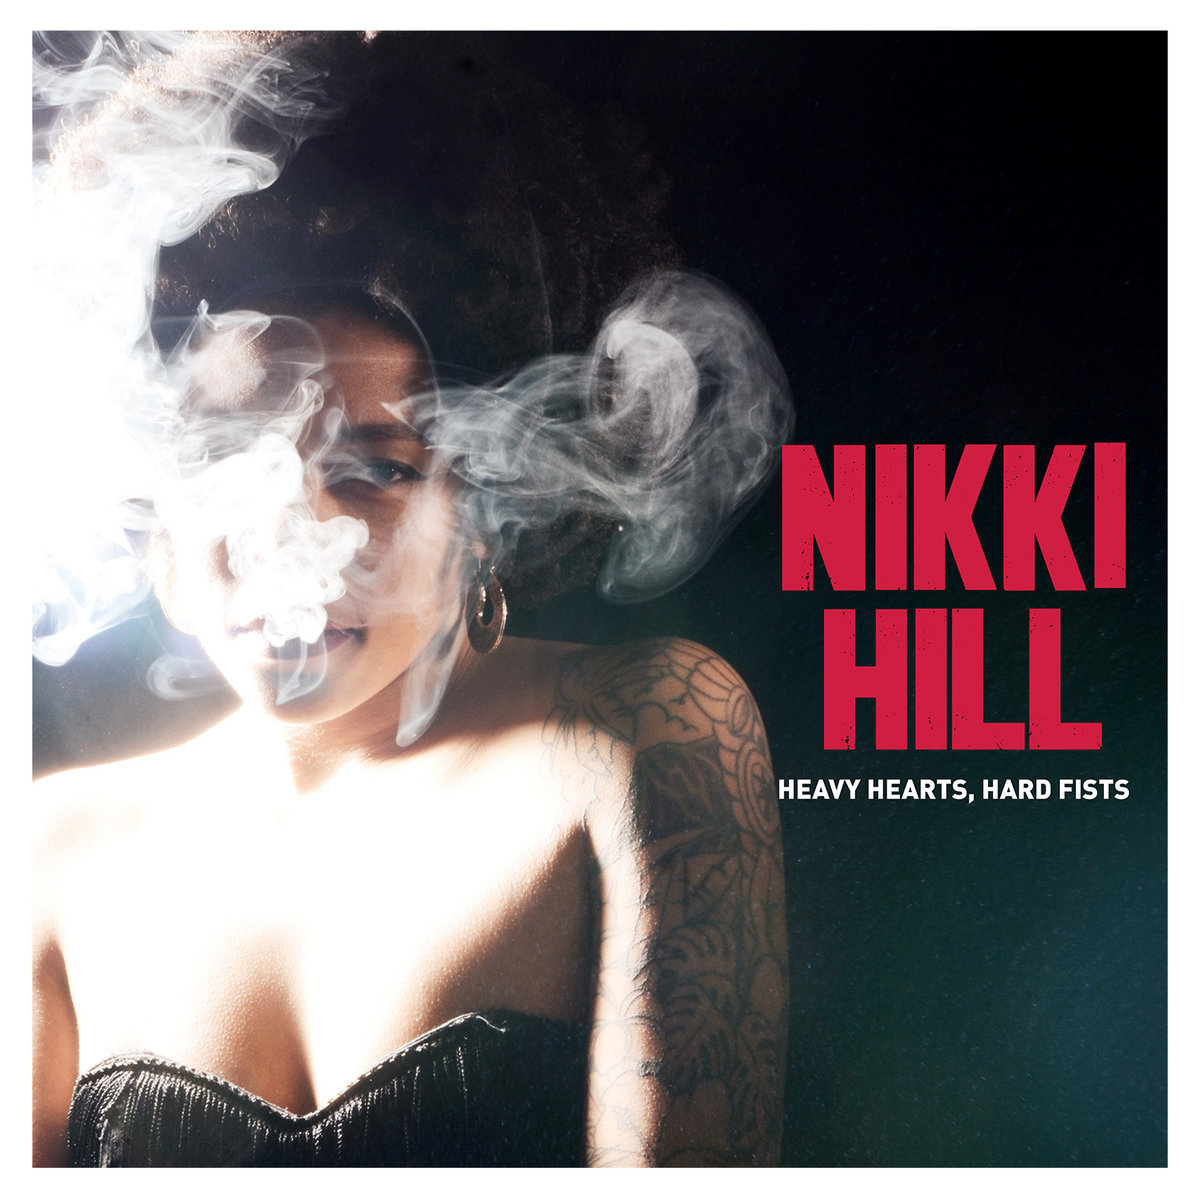 Nikki hill facebook